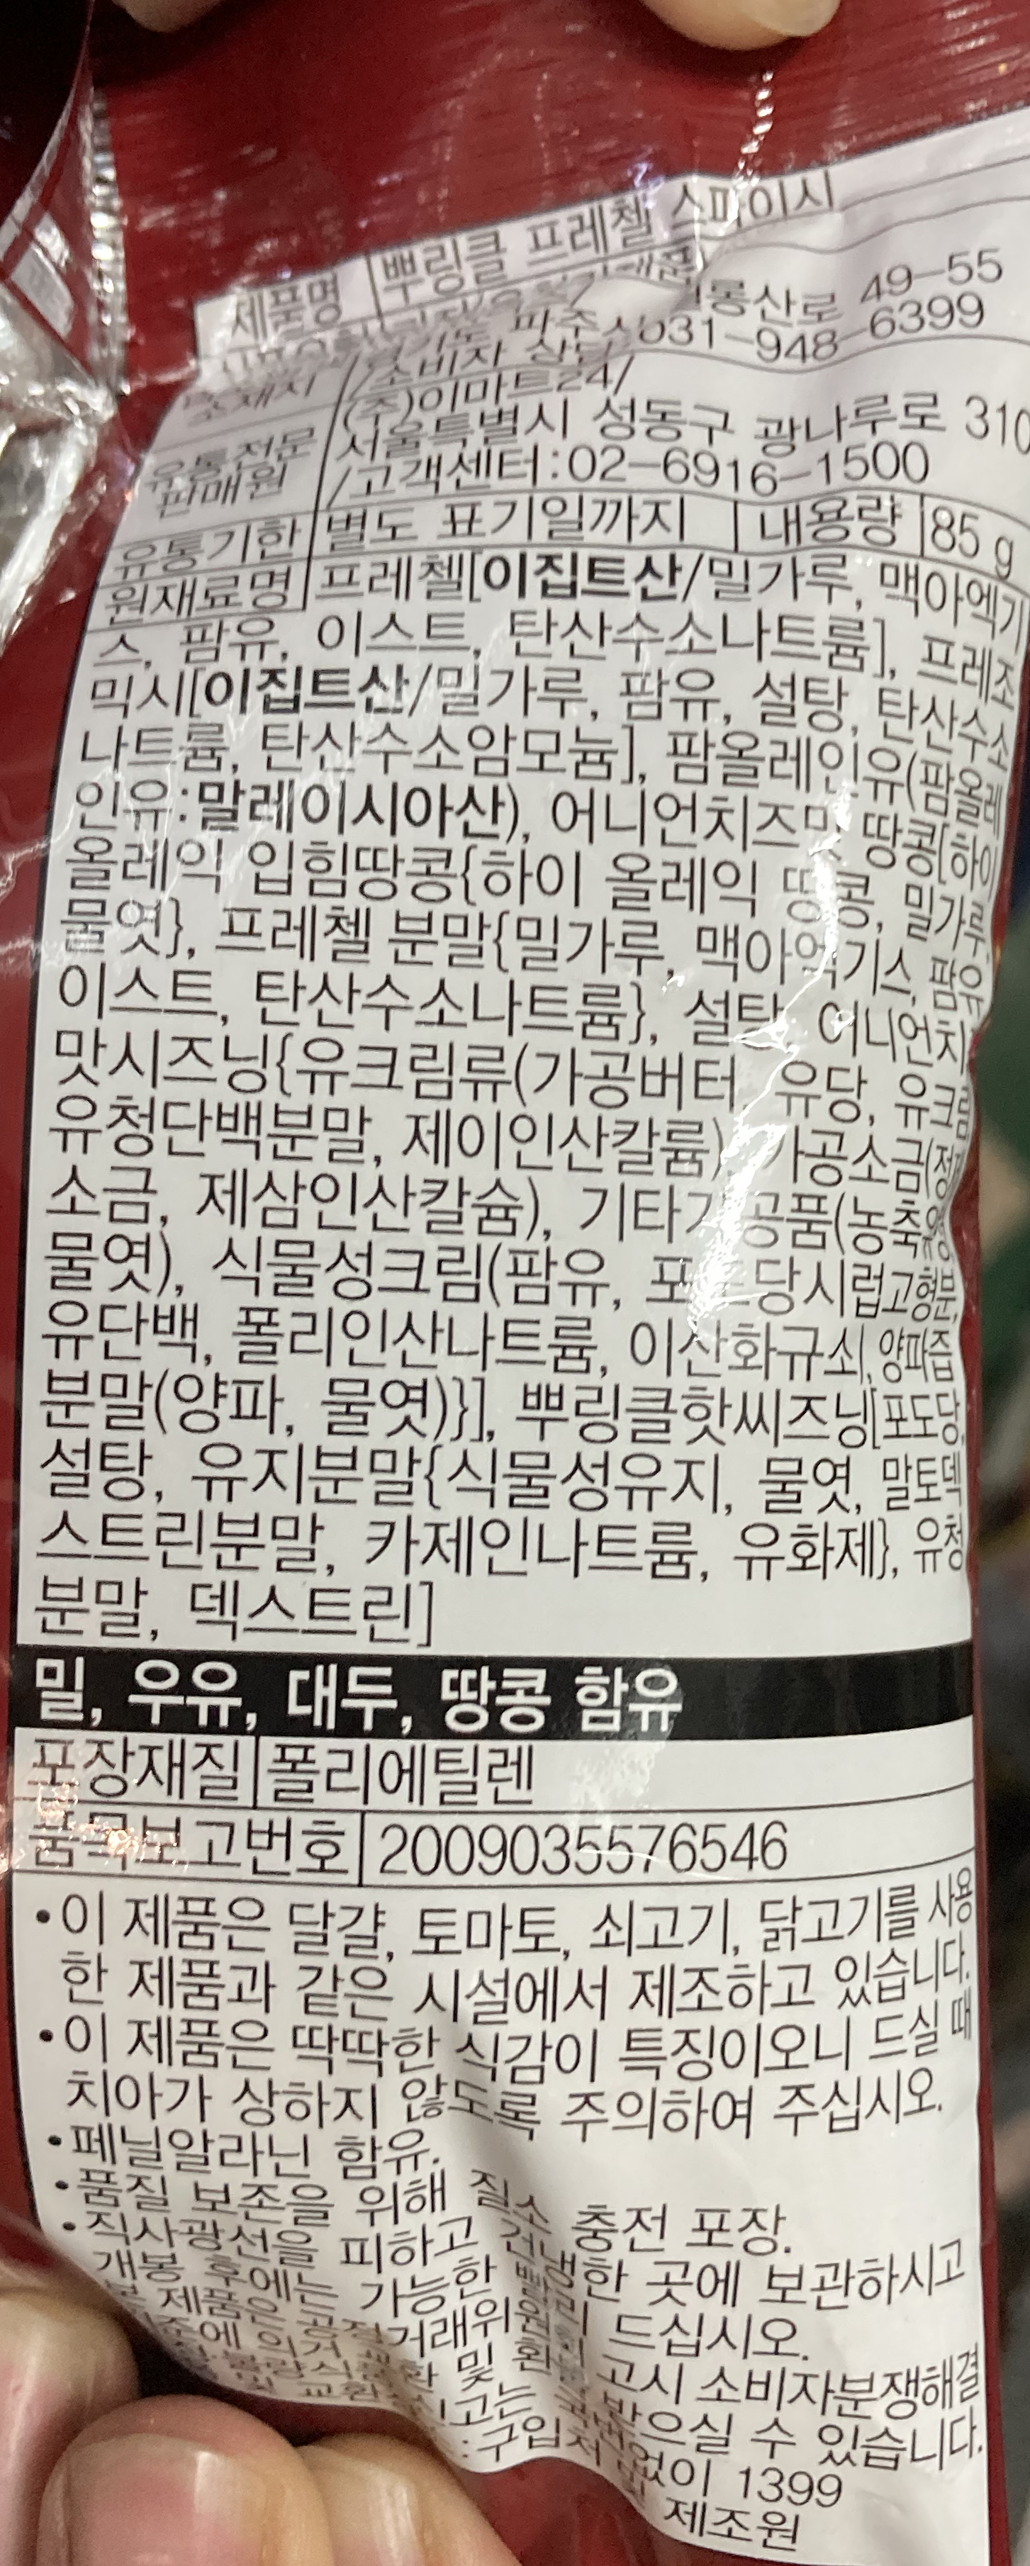 韓國食品-[Emart] I'm E Bburinkle 辣味椒鹽脆餅 85g